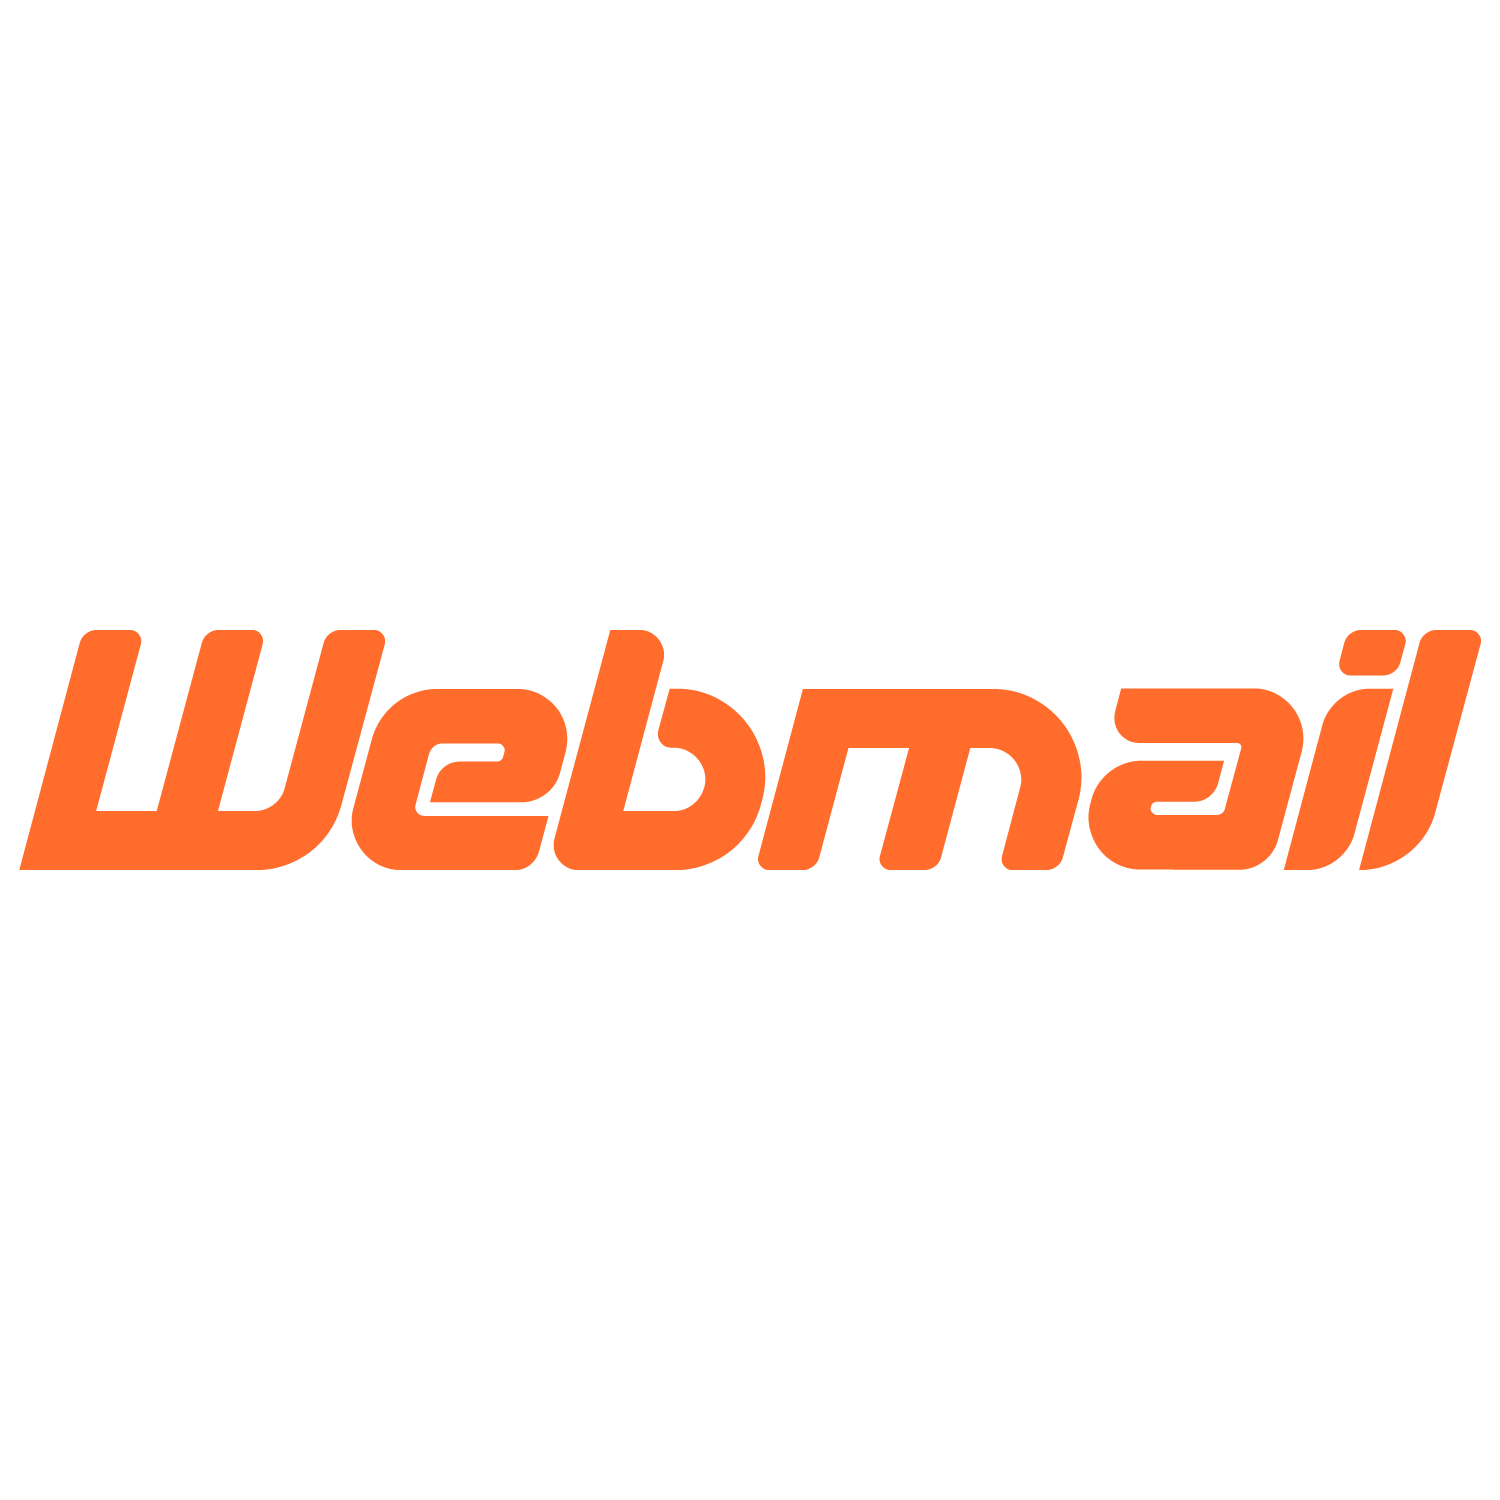 Webmail Logo Transparent Image